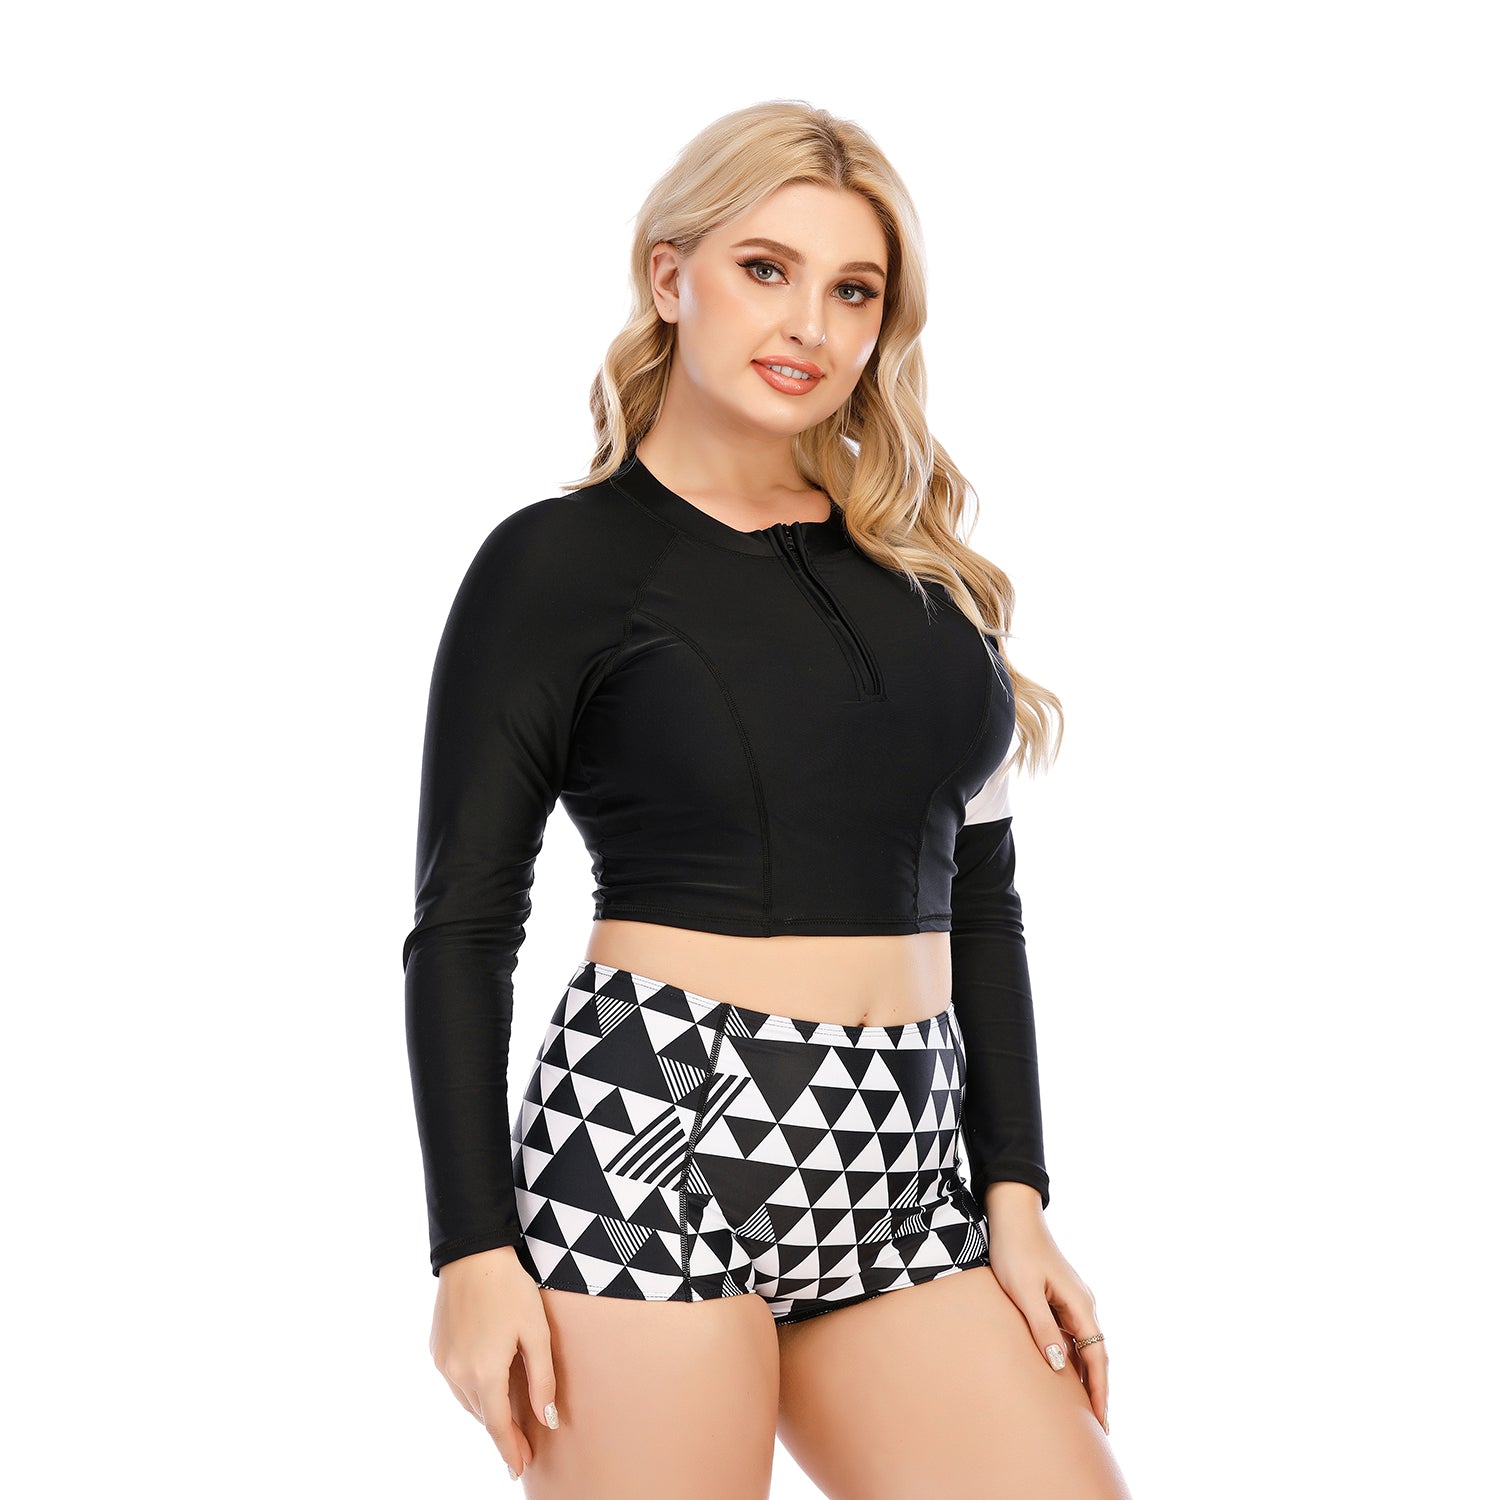 SiySiy Women's Plus Size Two Piece Long Sleeve Swimsuit Zipper Black and White Pattern Bottom Swimsuit